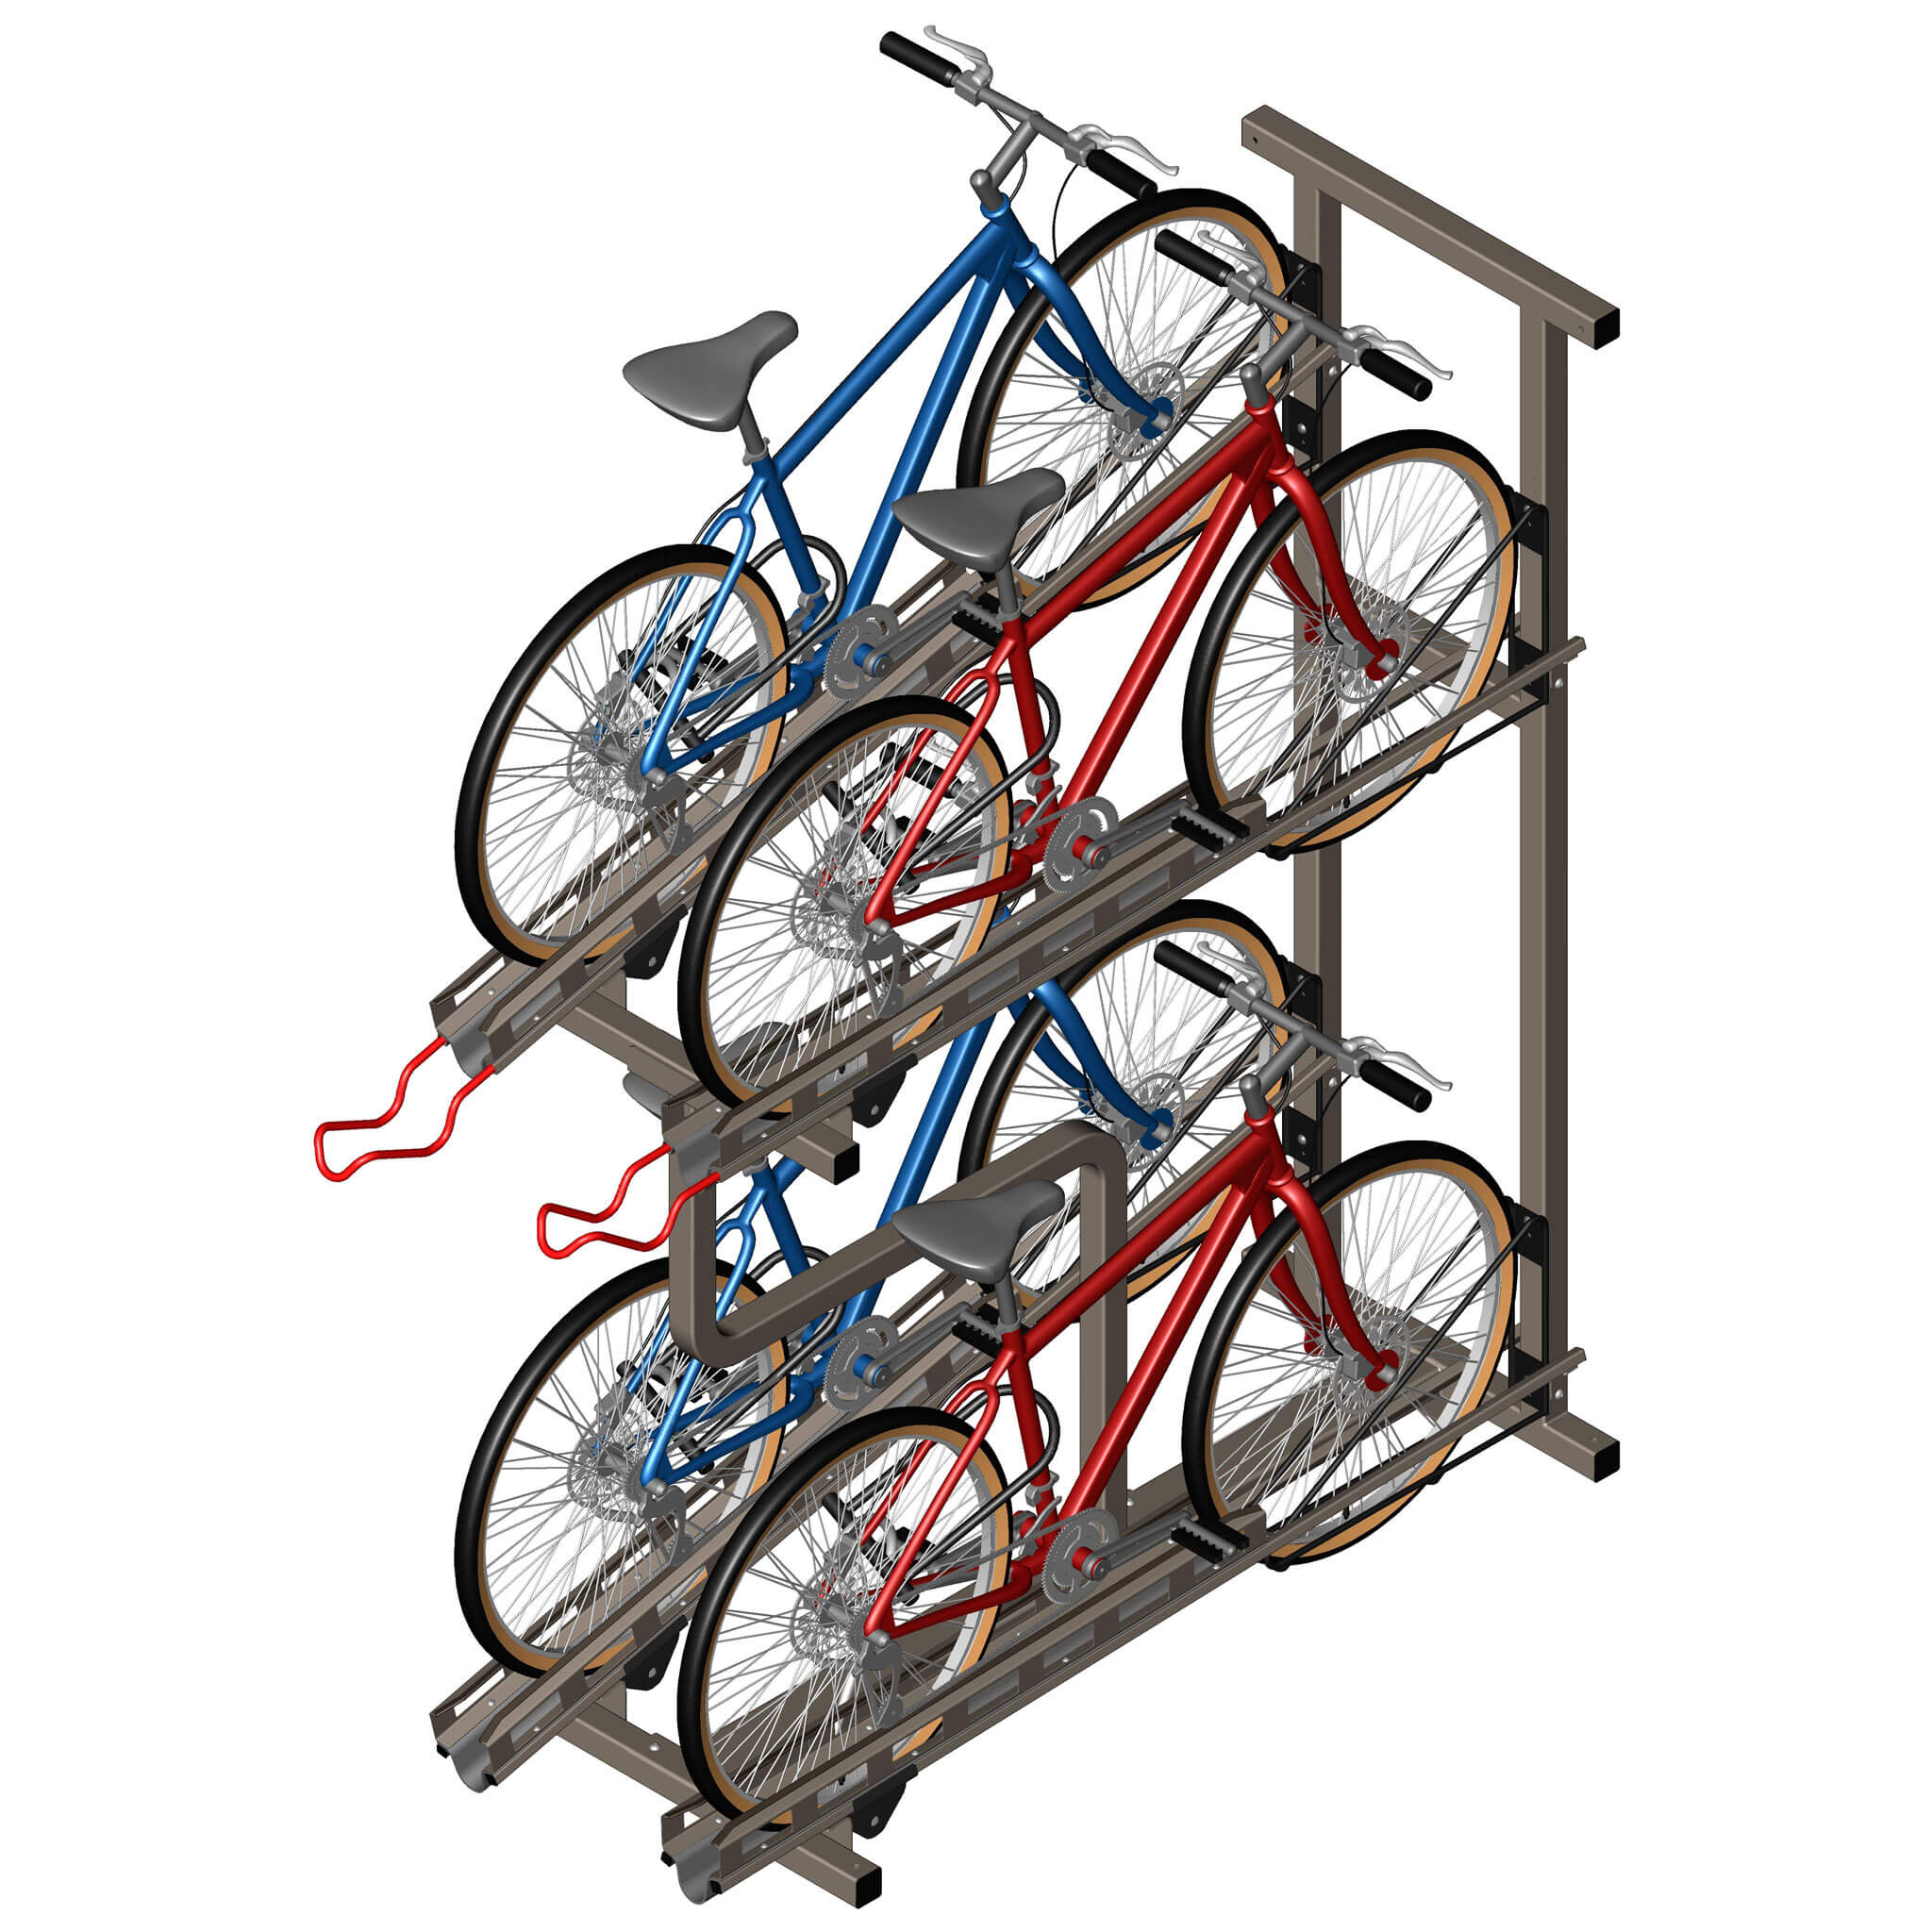 https://cyclesafe.com/wp-content/uploads/2016/11/bike-rack-quad-hi-density.jpg